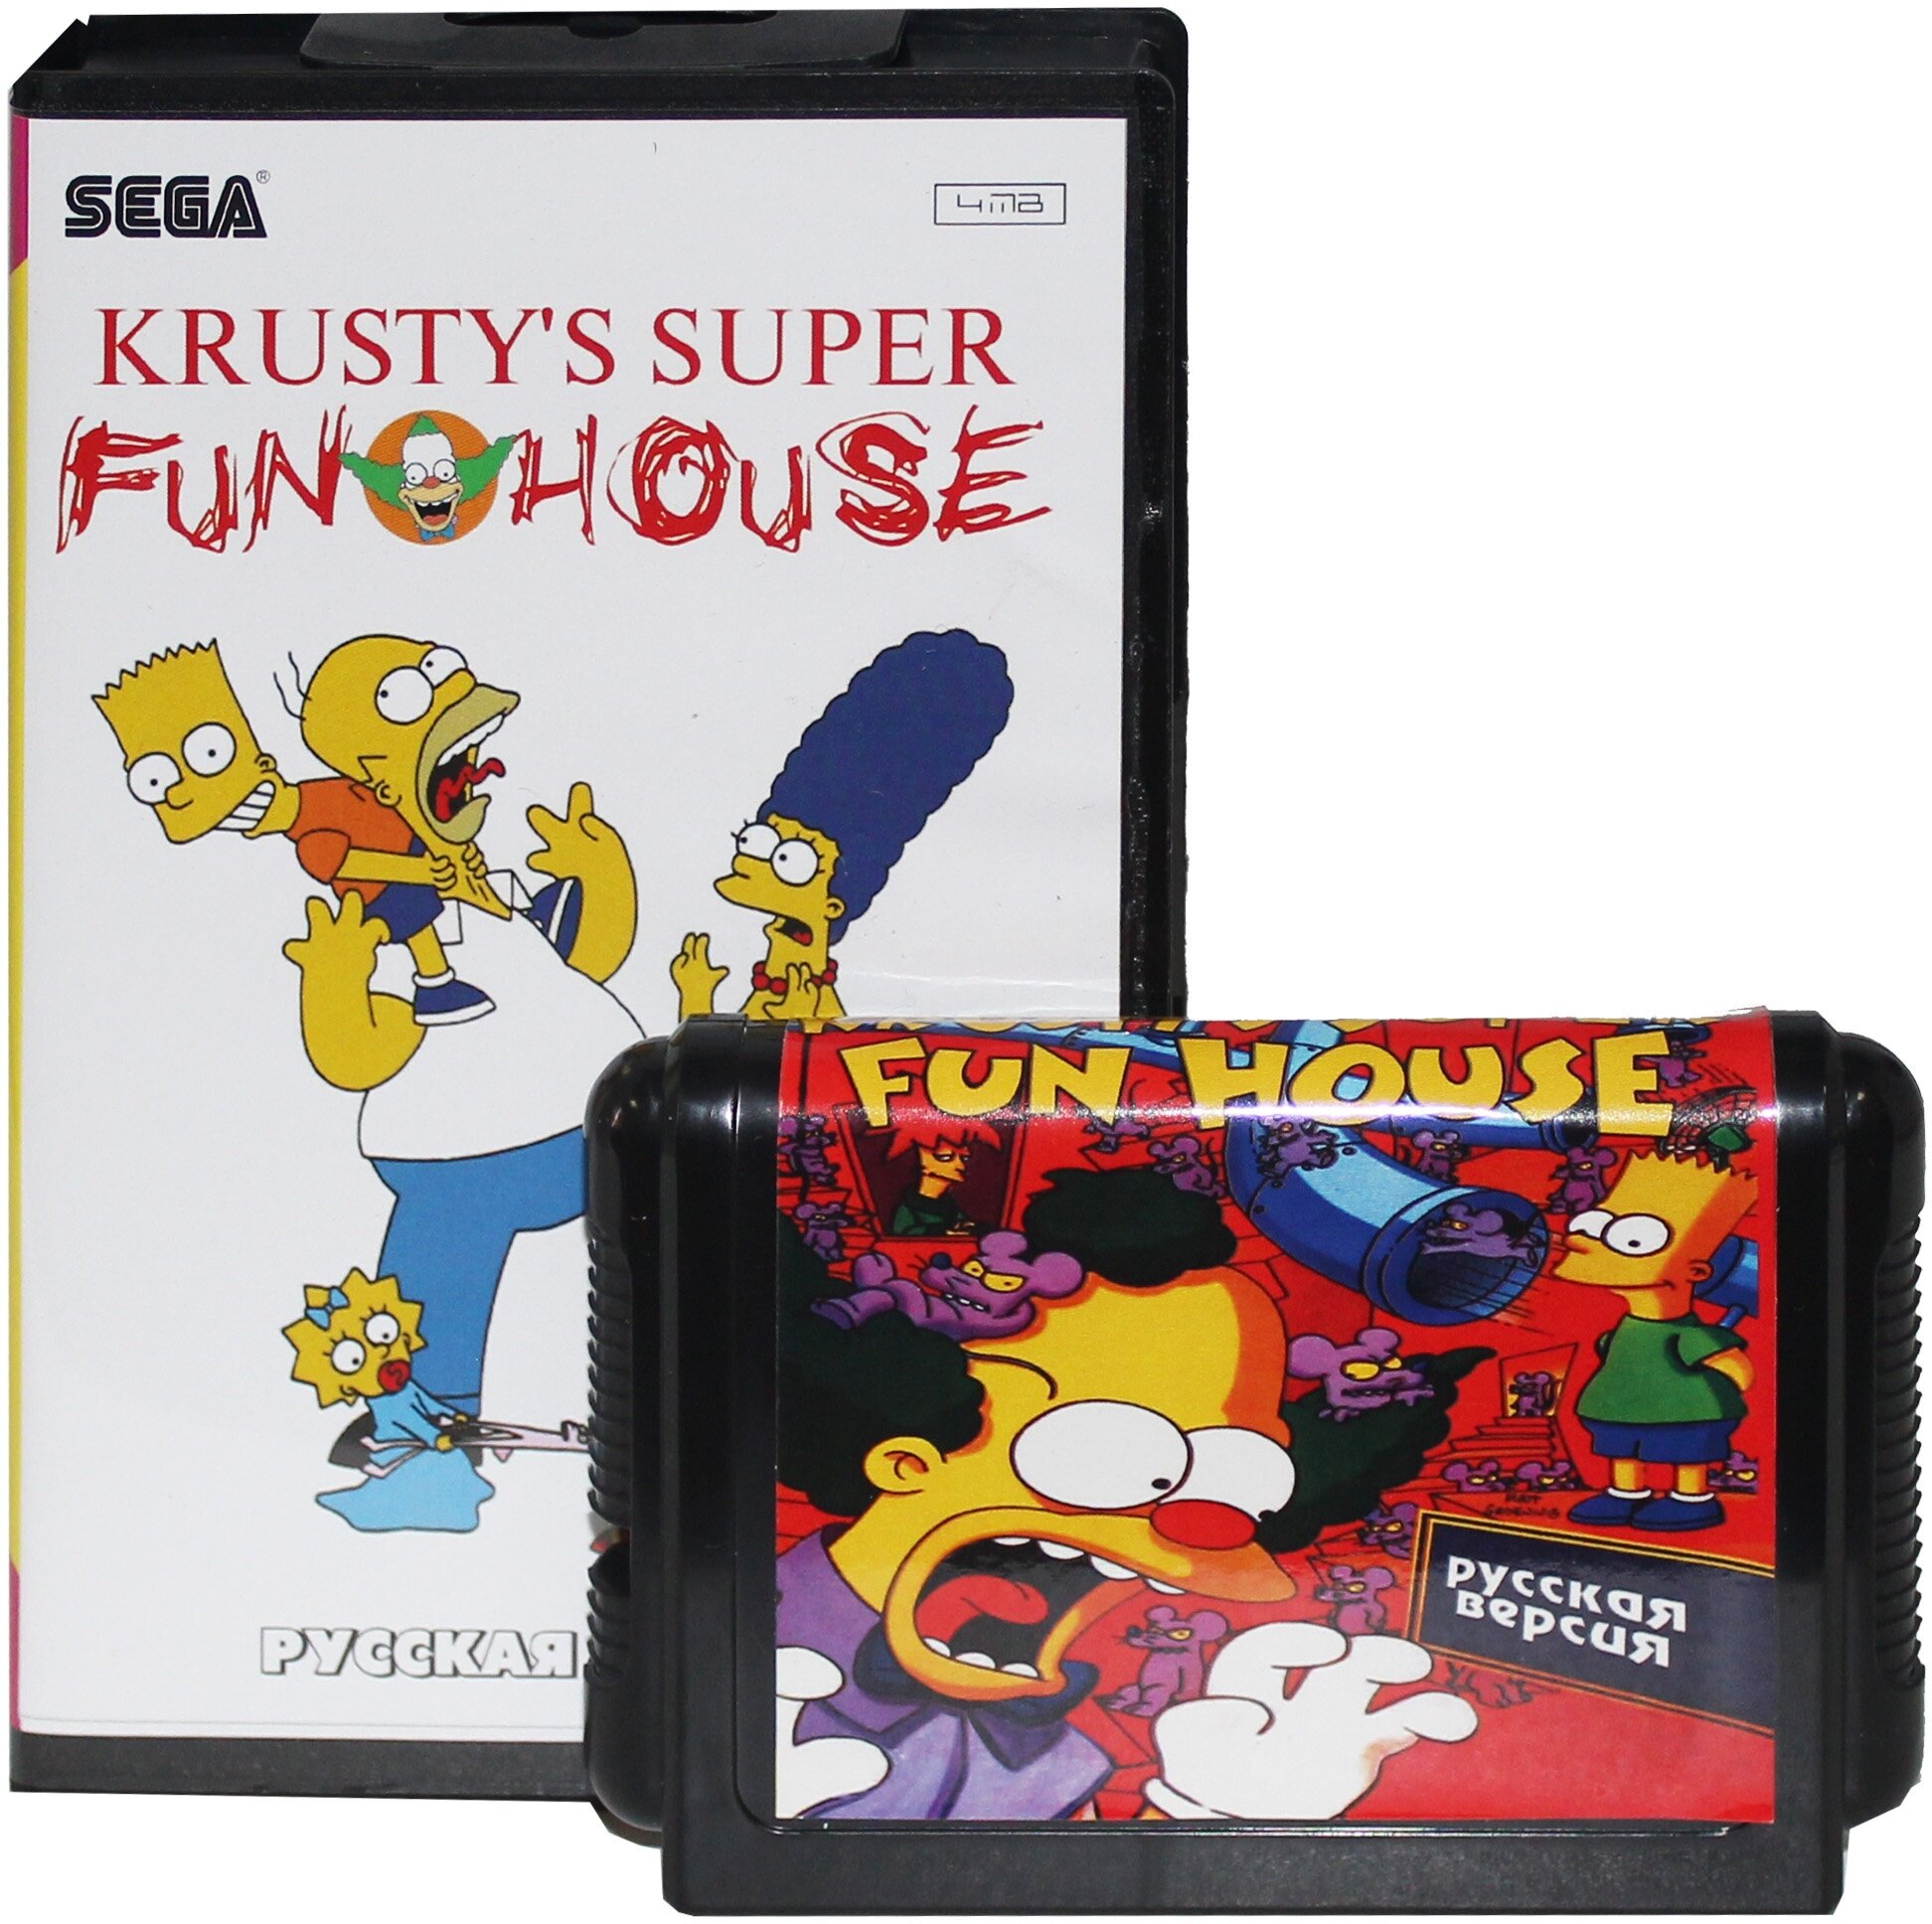 Simpsons: Bart vs The Space Mutants - симпатичная, в стиле рисованного мультфильма, но совсем непростая игра на Sega